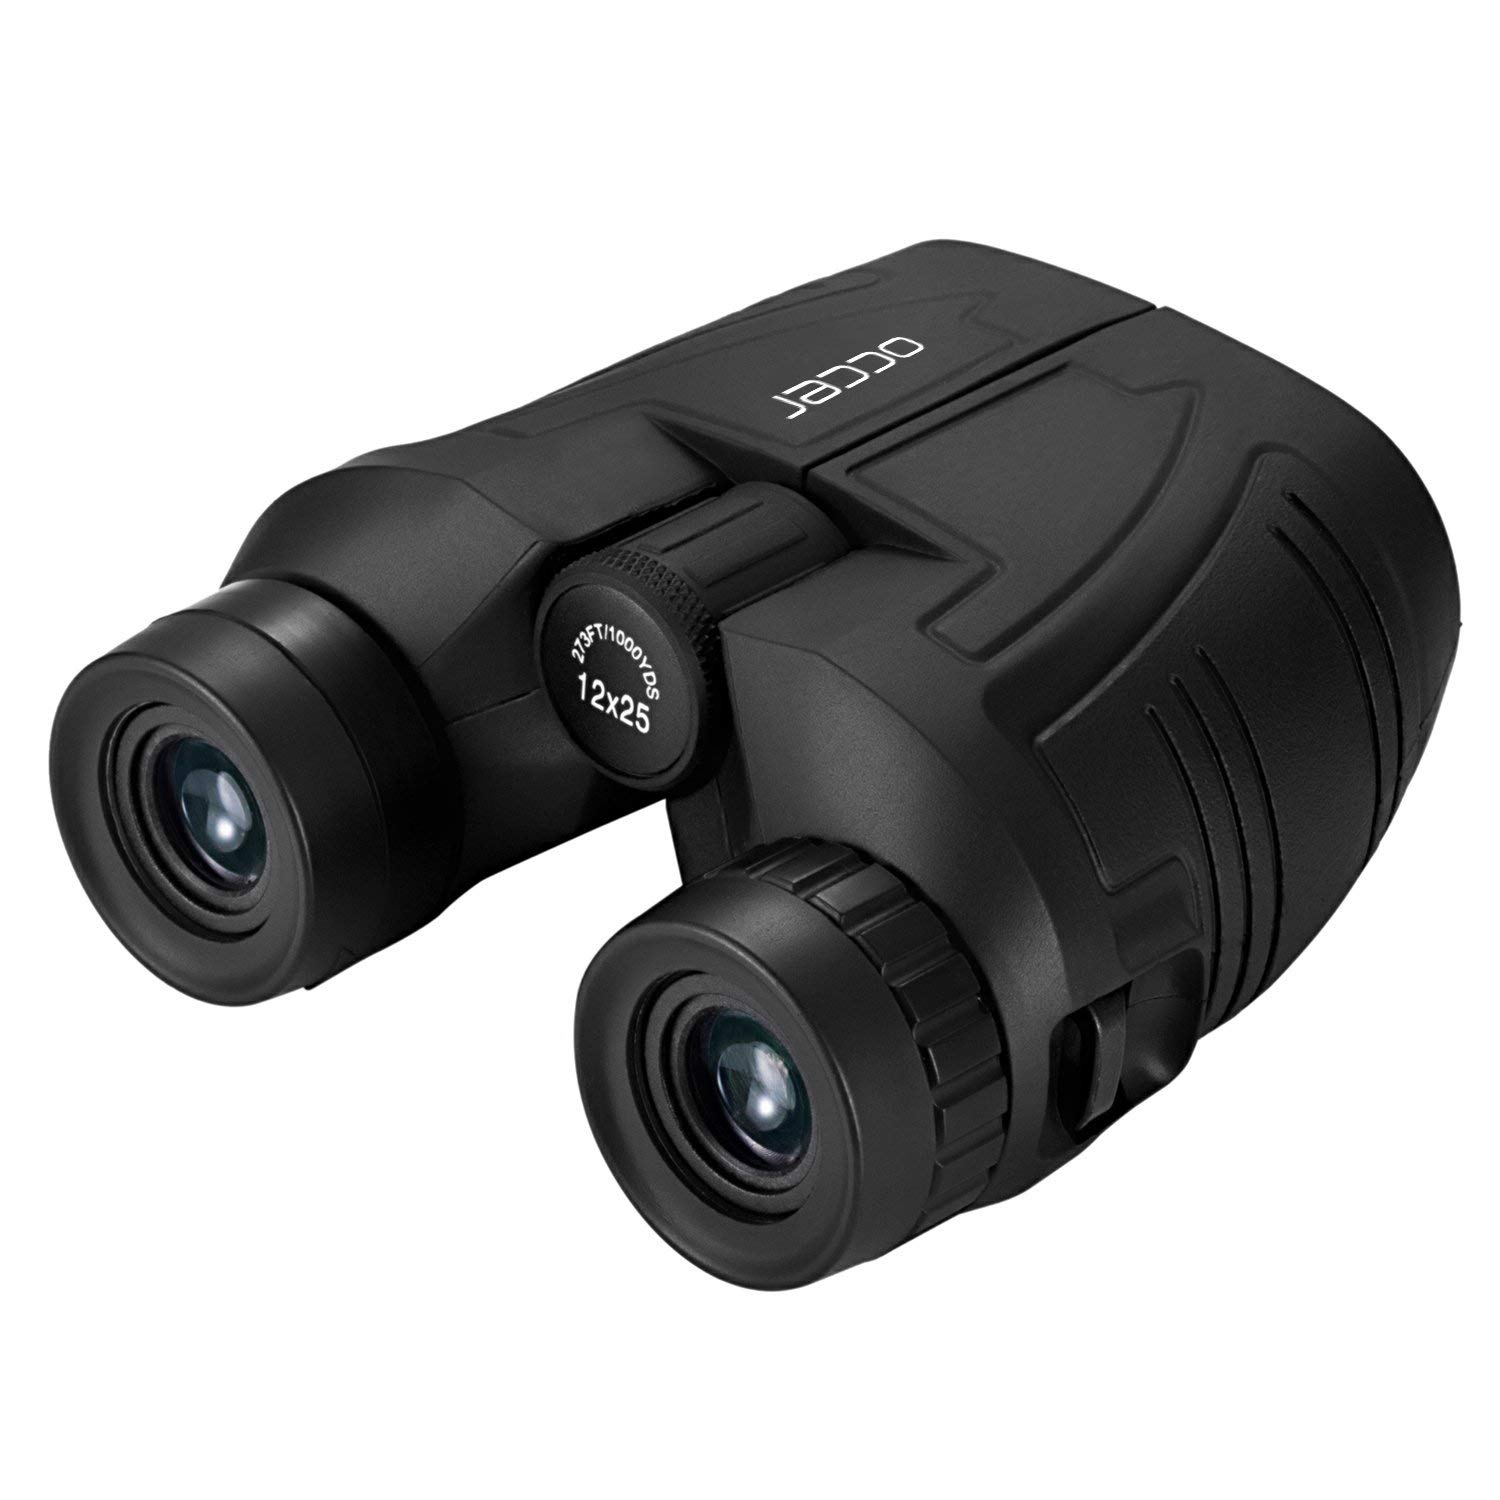 Occer 12x25 Compact Binocular